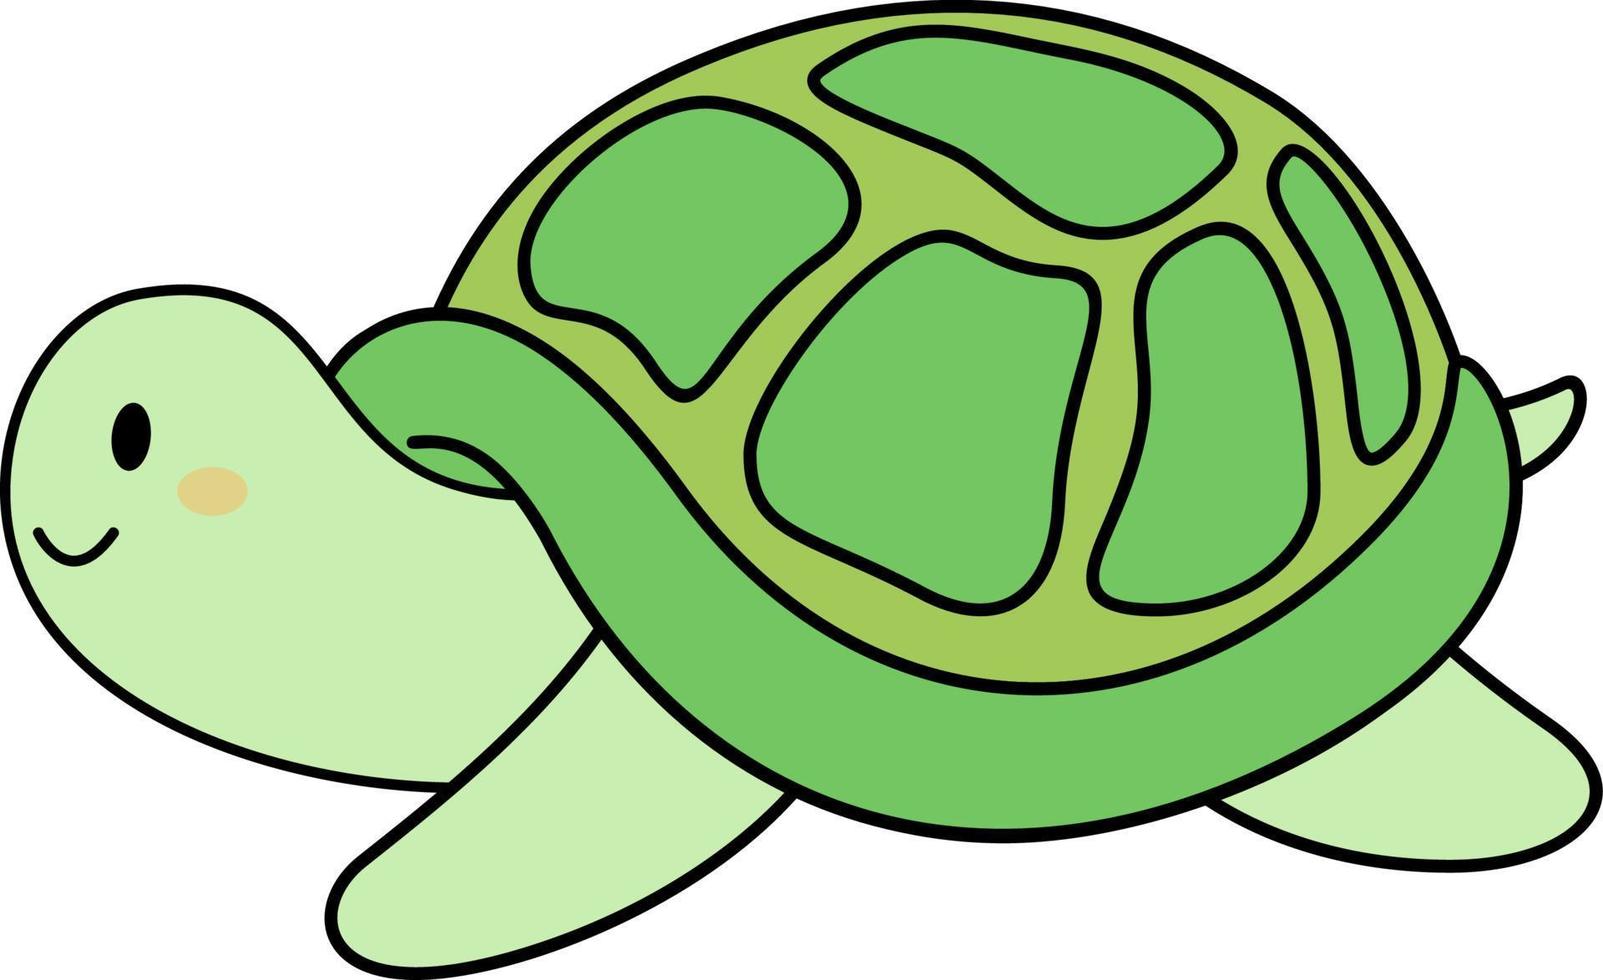 Crawling Turtle Illustration vector